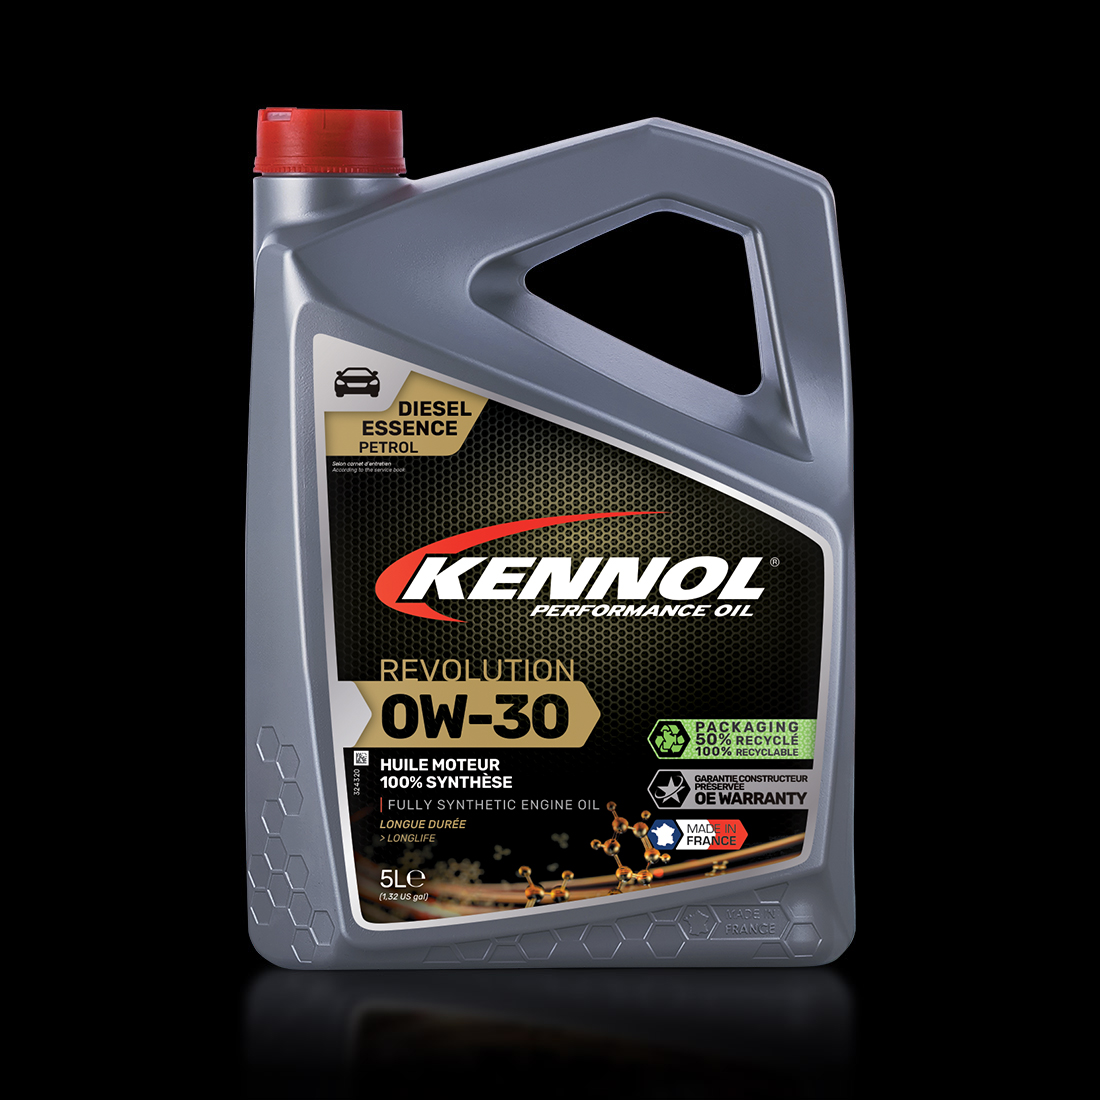 REVOLUTION 0W-30  KENNOL - Performance Oil